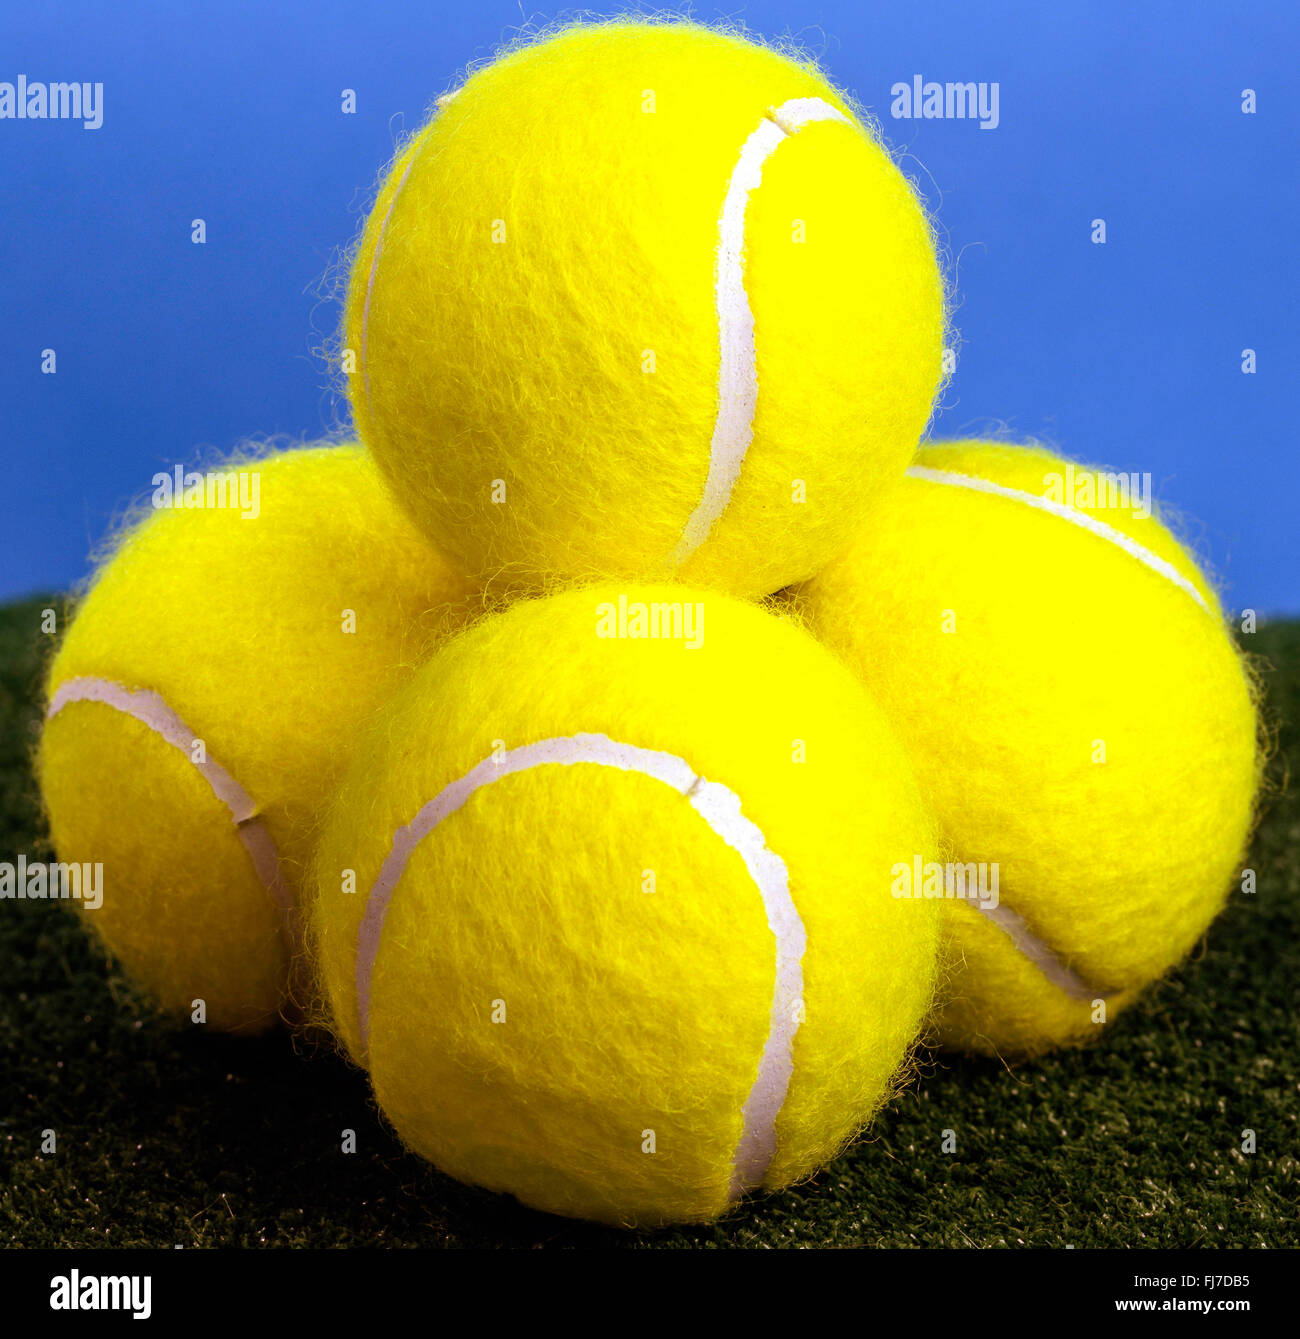 Quatre balles de tennis jaunes en studio, Grand Londres, Angleterre, Royaume-Uni Banque D'Images